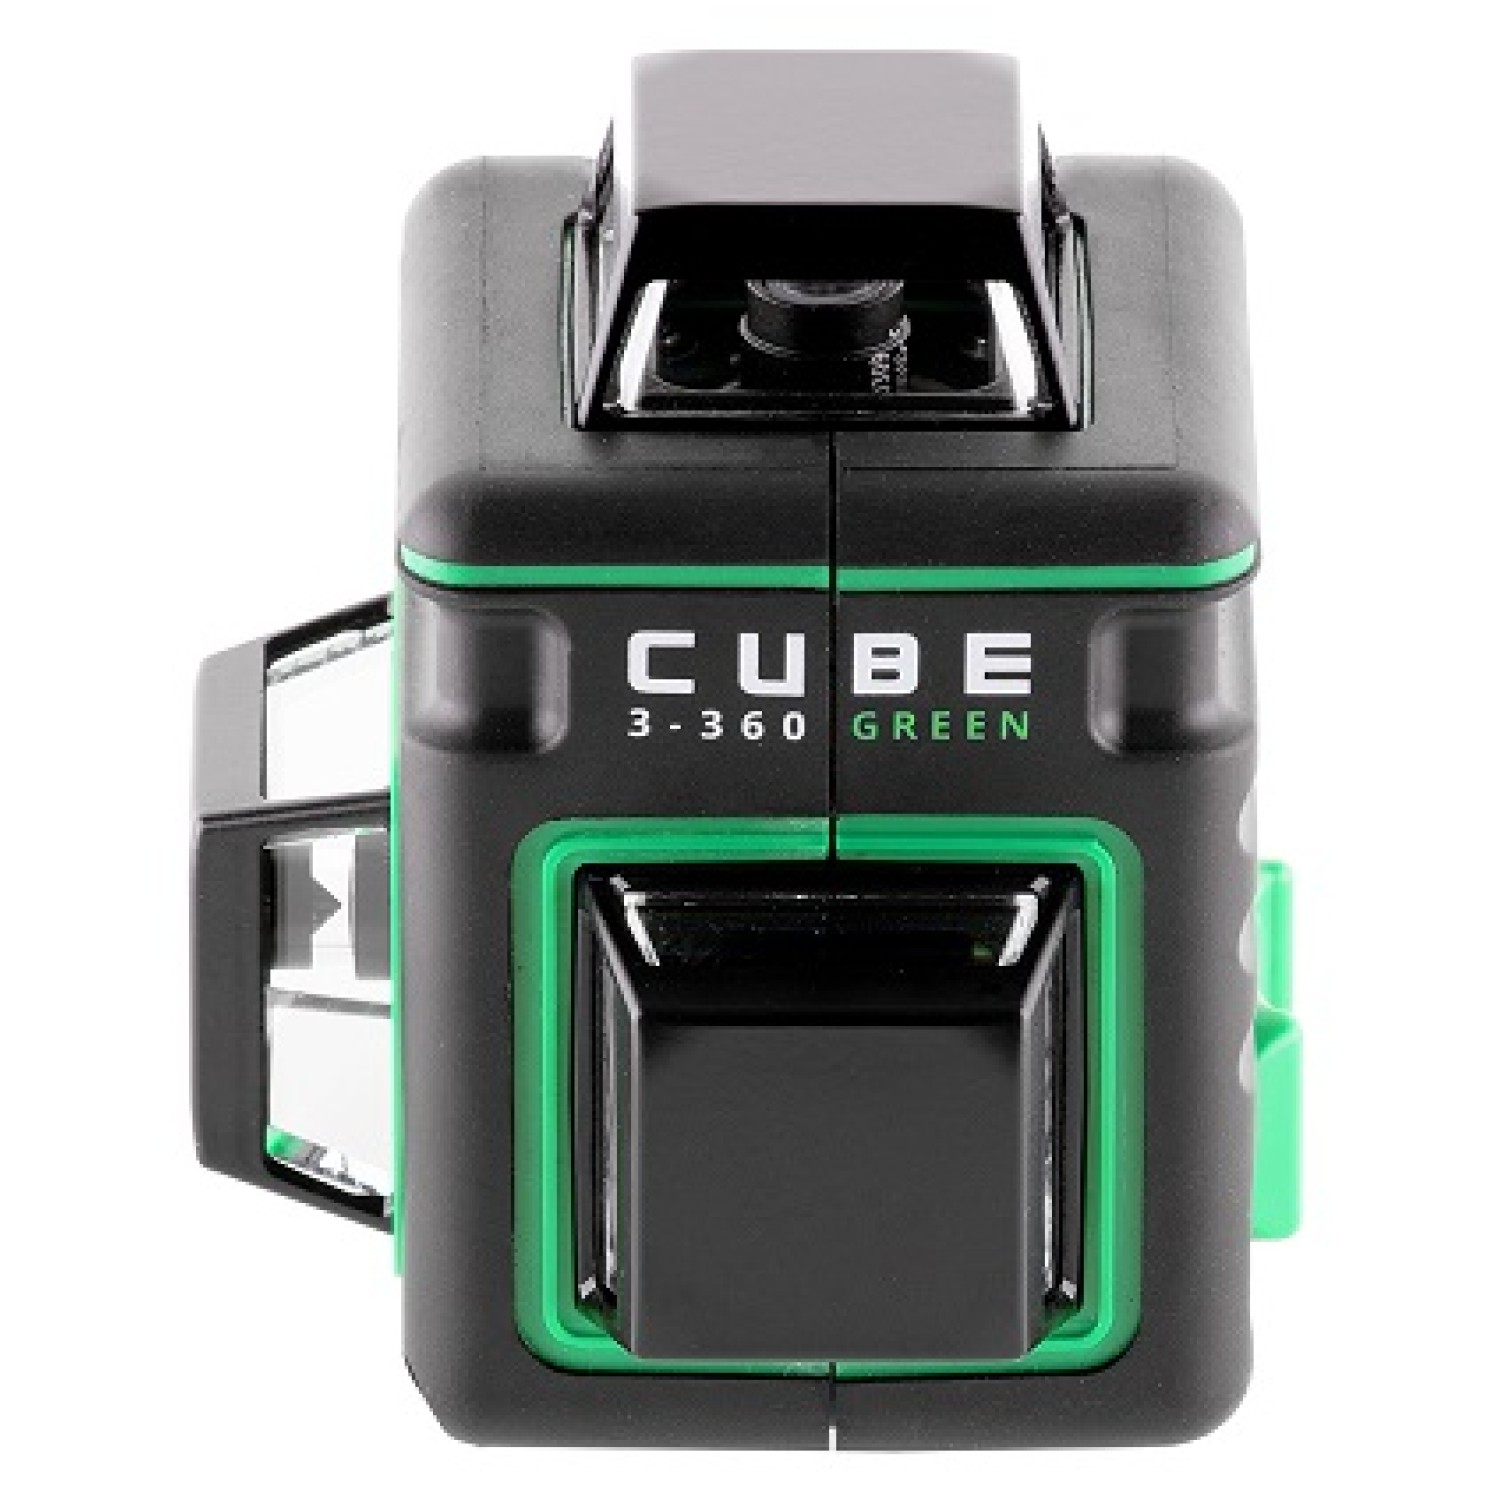 Уровень ada cube 360 green. Ada Cube 3-360 Green. Ada Cube 3-360 Basic Edition а00559. Уровень лазерный ada Cube 3-360 Green Ultimate Edition. Лазерный уровень ada Cube 360 Basic Edition.